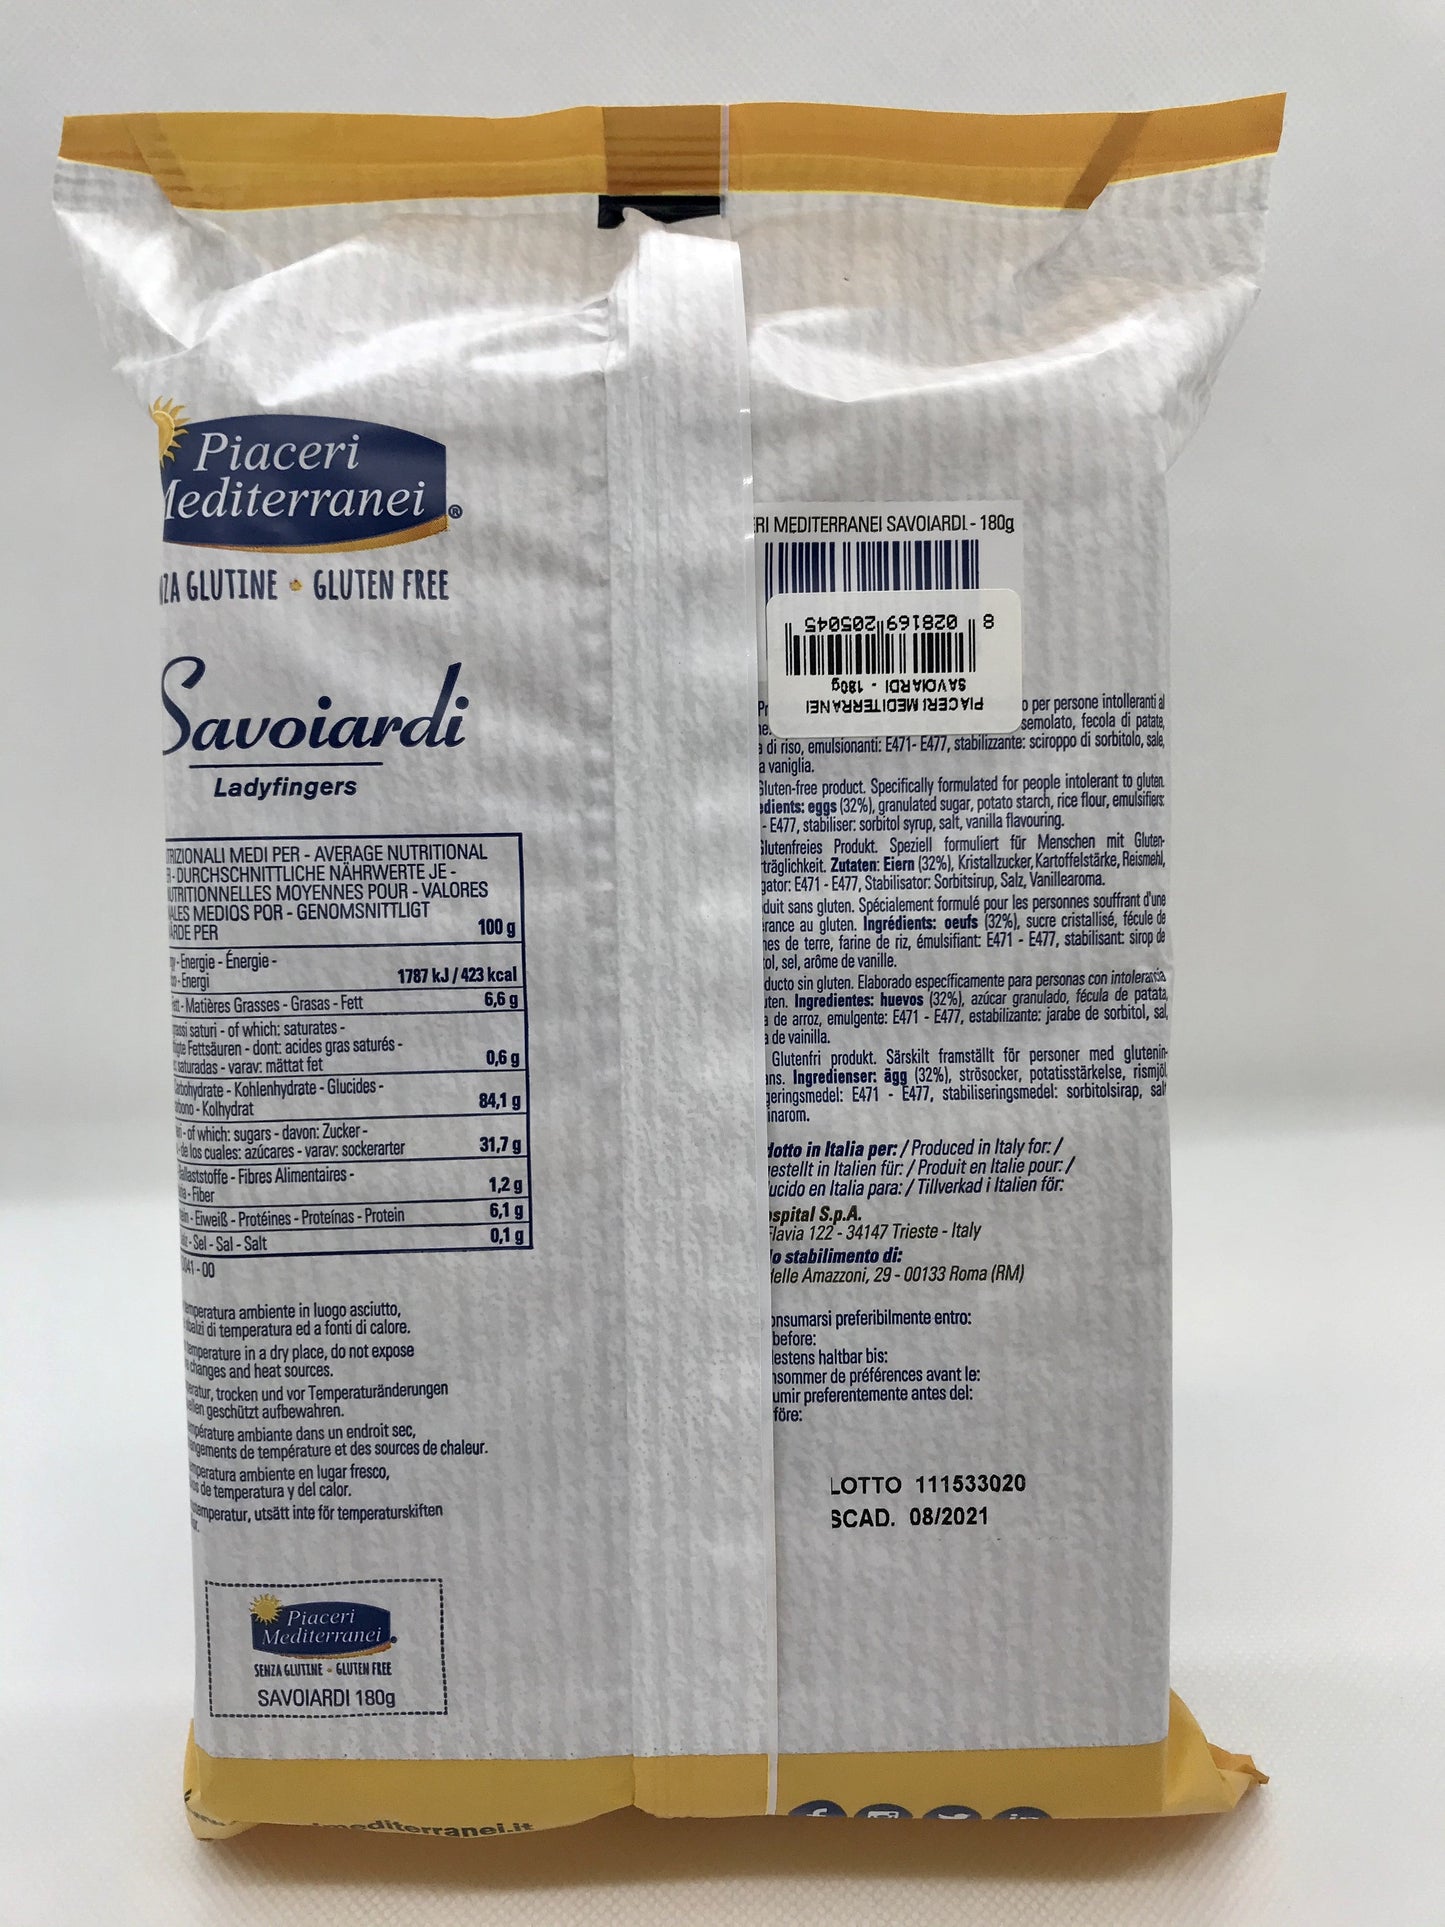 Piaceri Mediterranei Savoiardi - 180 g Bottega senza Glutine